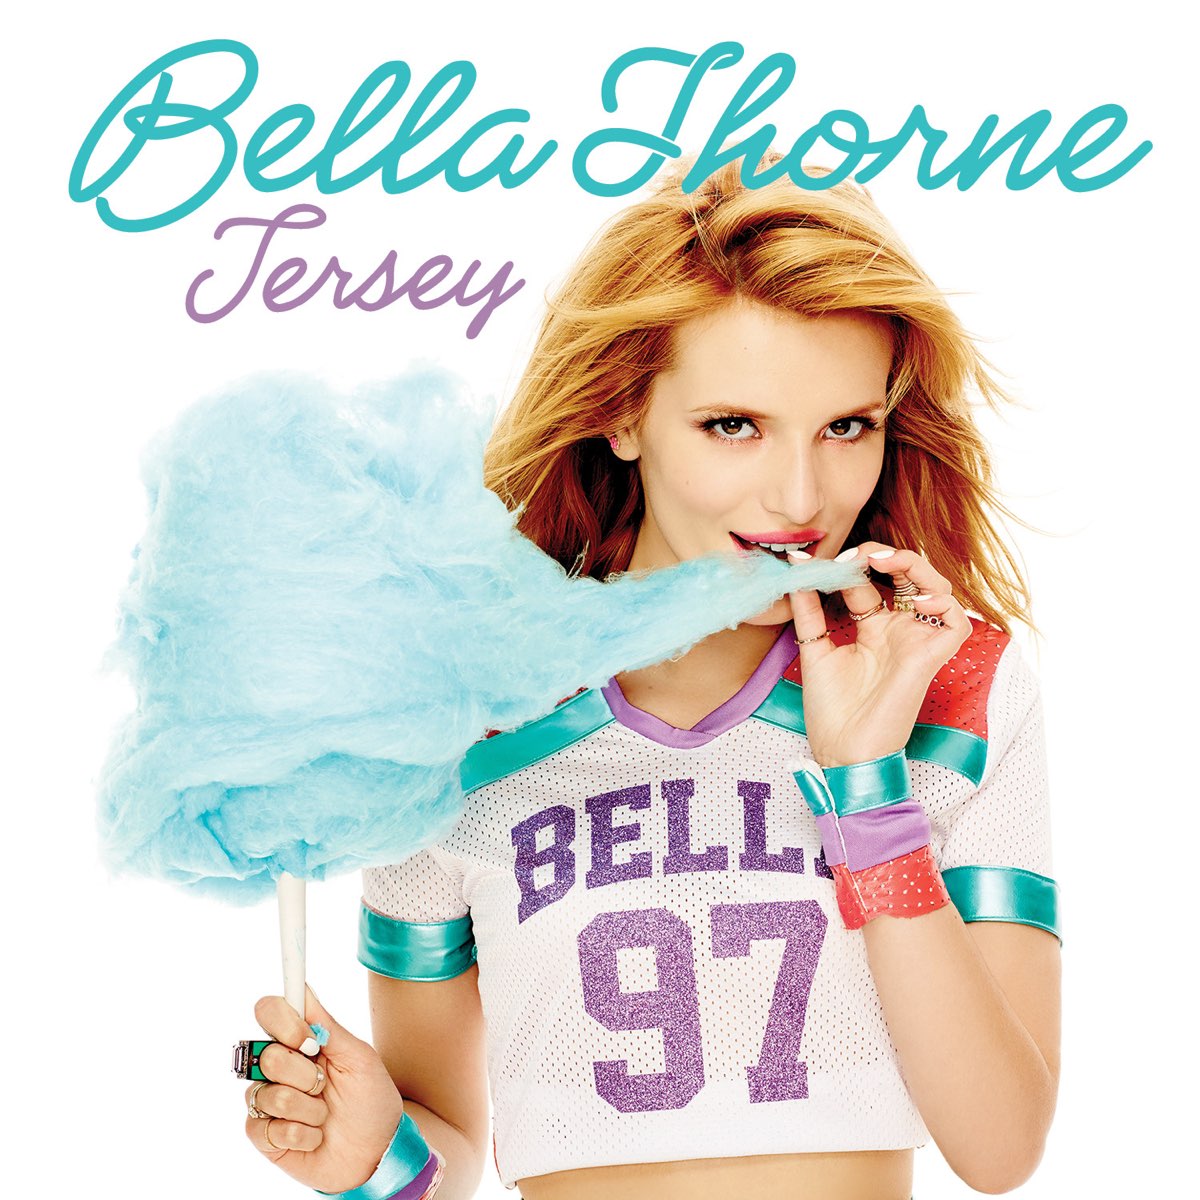 Bella Thorne Boyfriend Material cover artwork